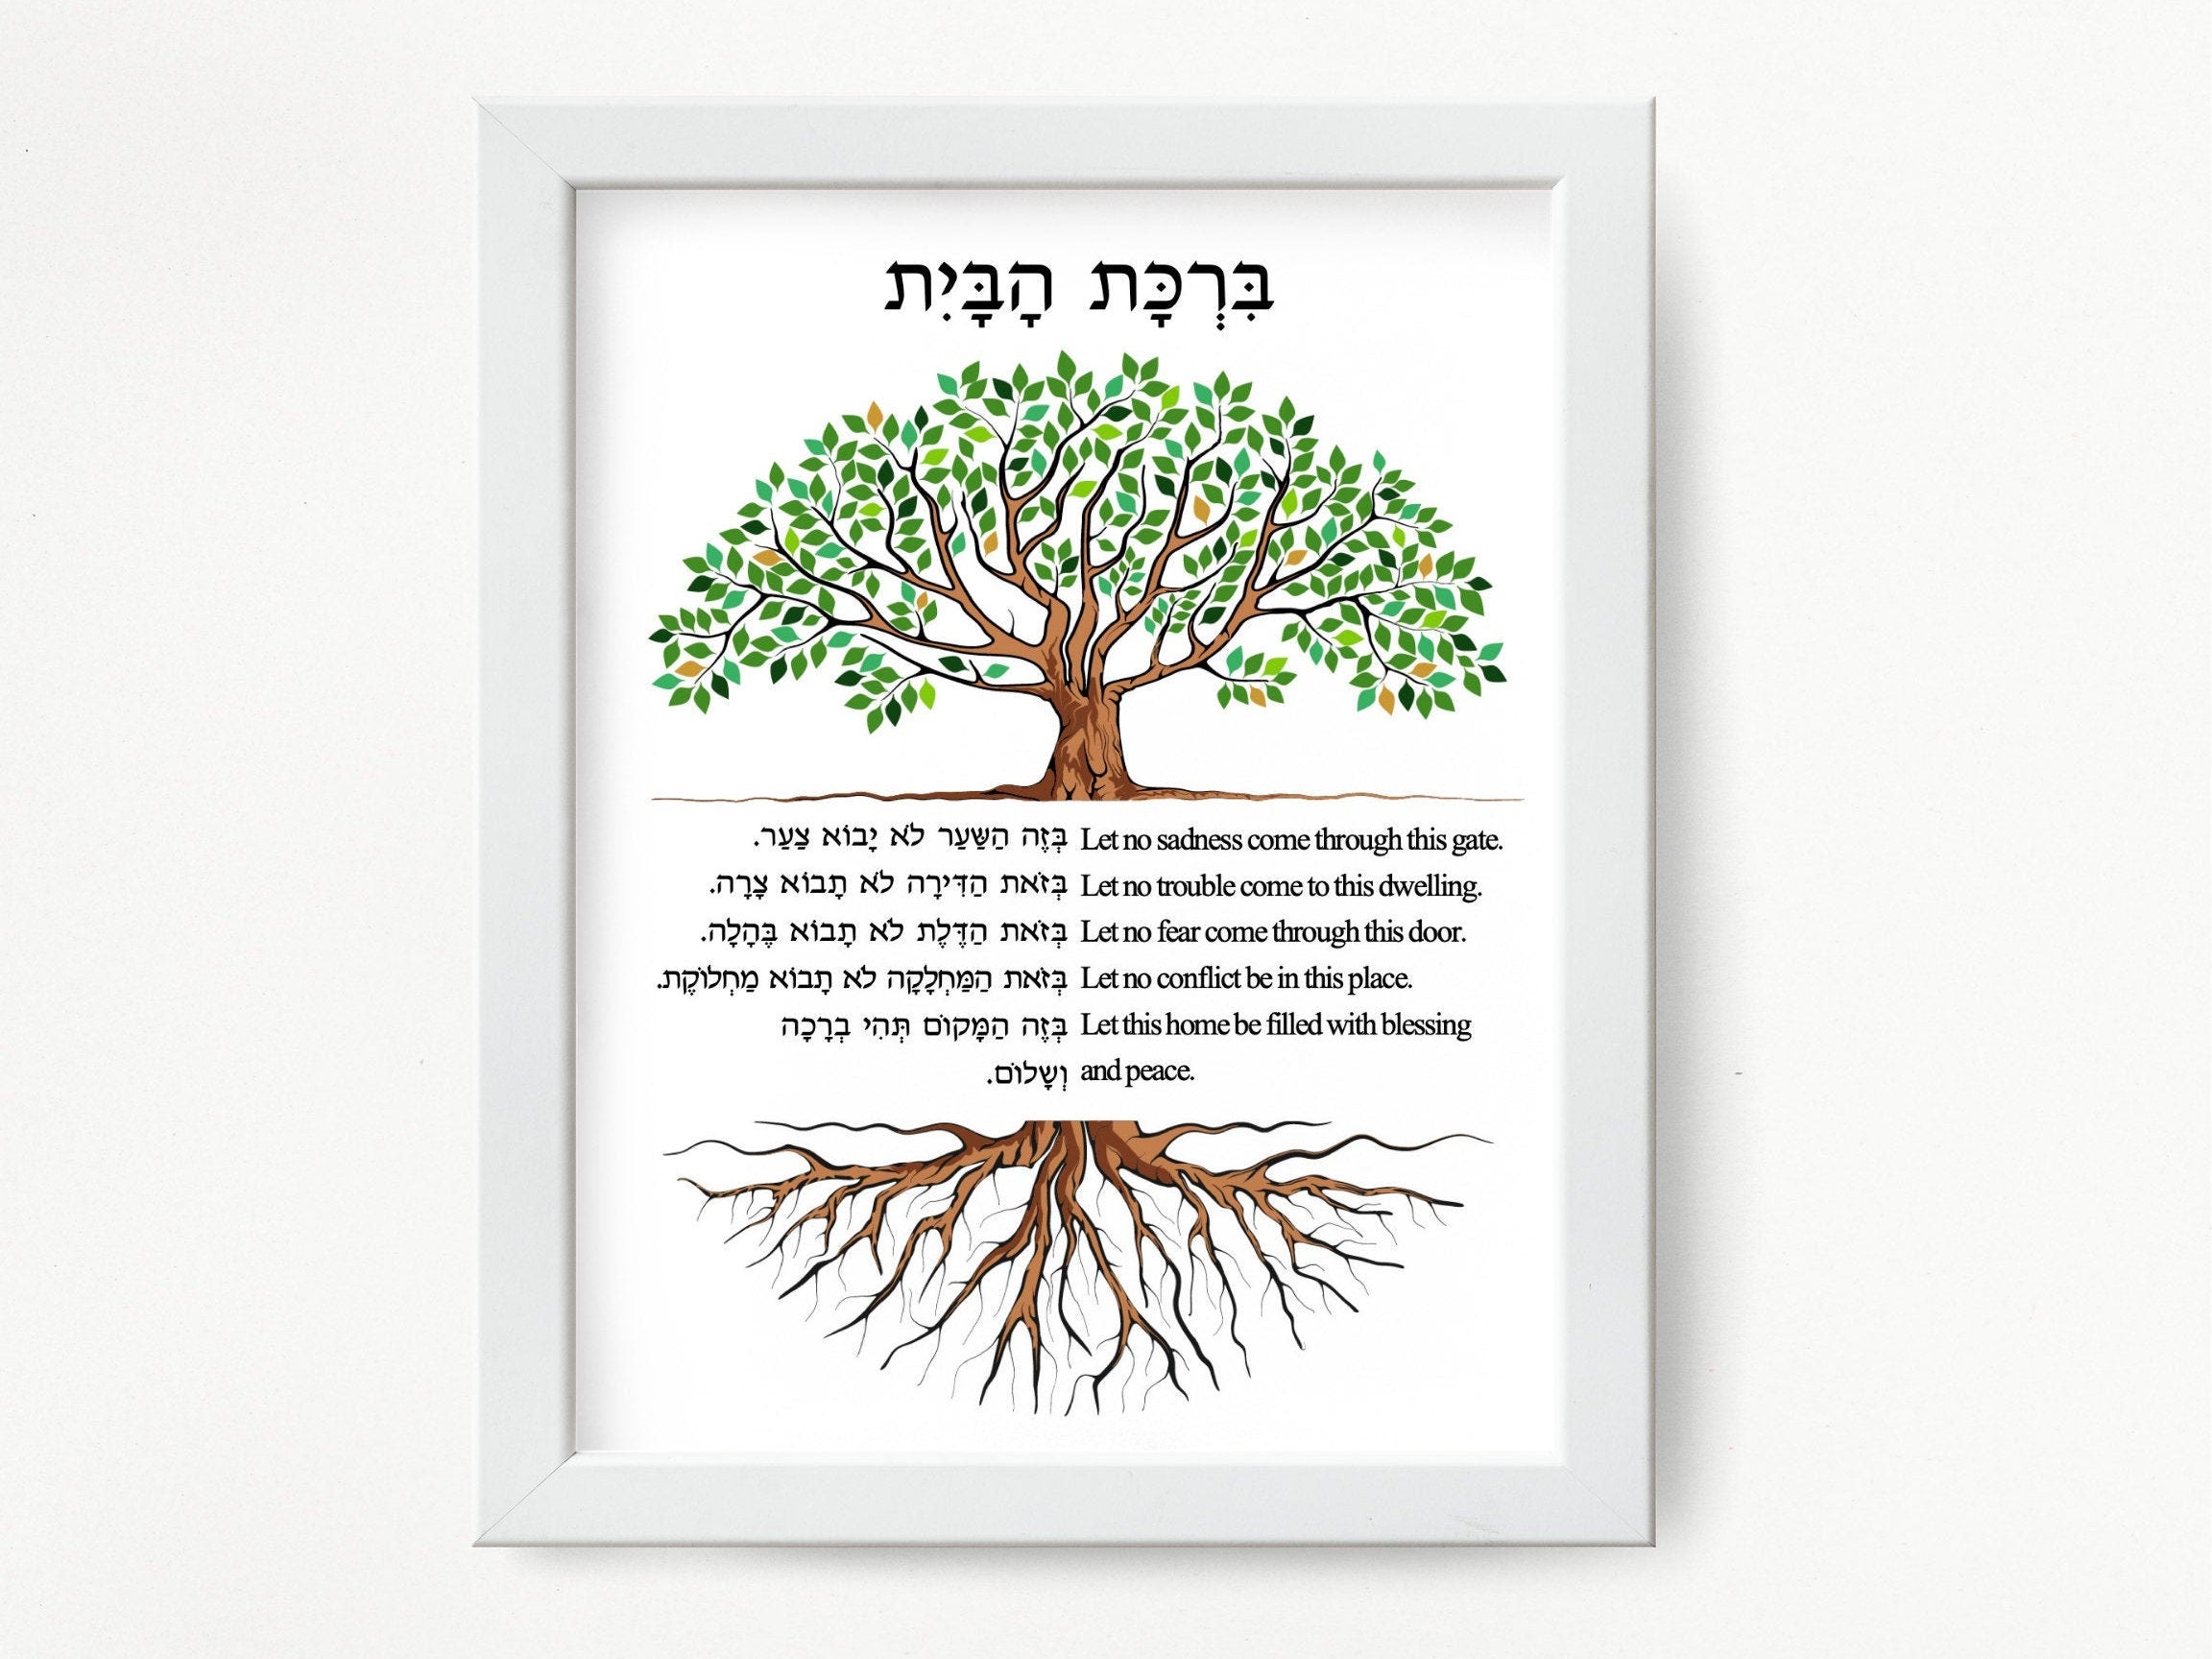 Pray Without Ceasing Prayer Sticker - Beneath the Broom Tree